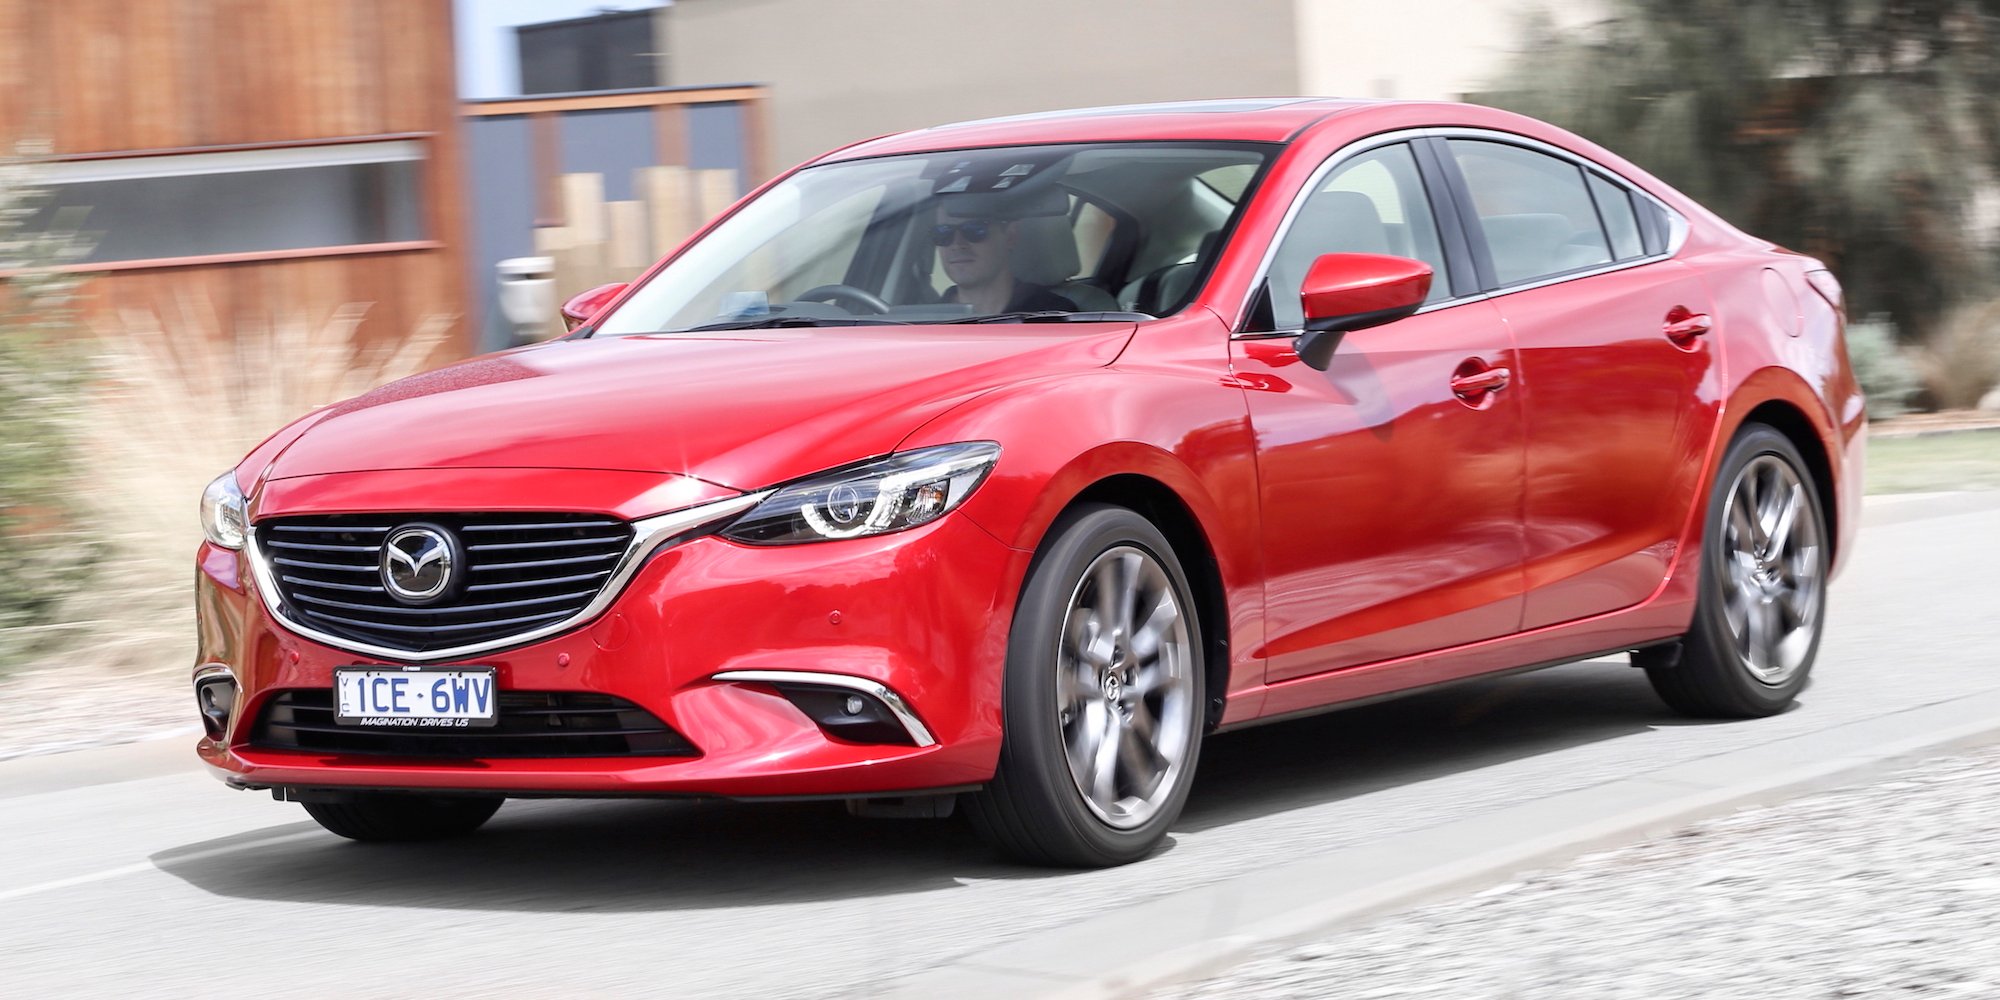 2015 Mazda 6 Review photos CarAdvice